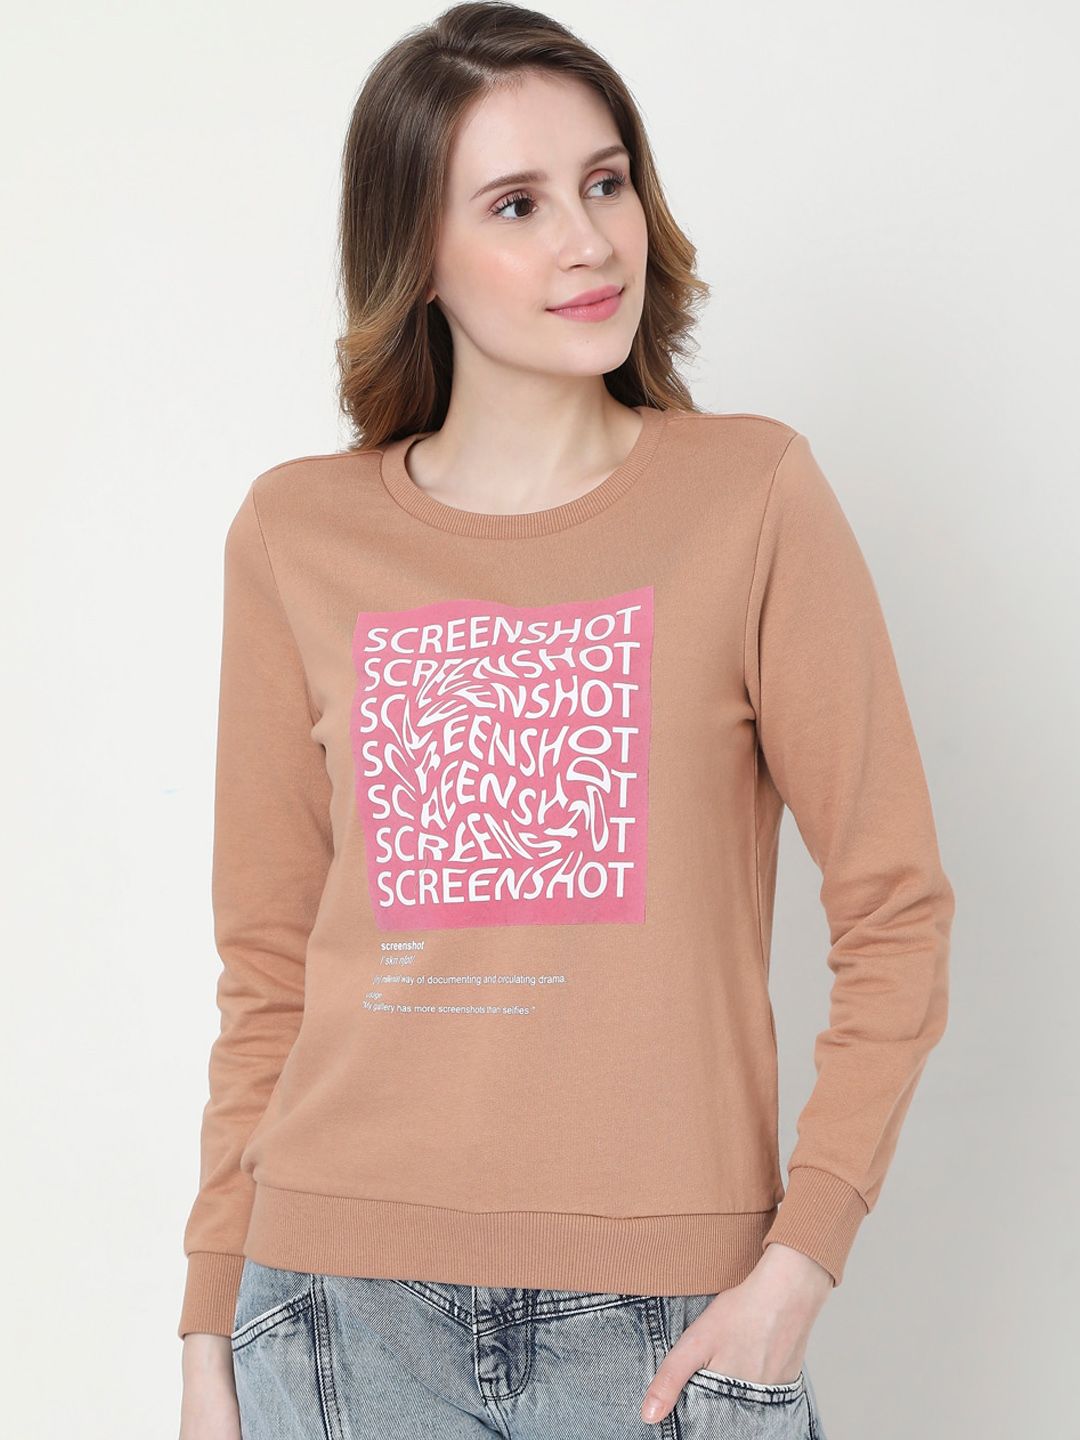 Vero Moda Women Brown Printed Sweatshirt Price in India